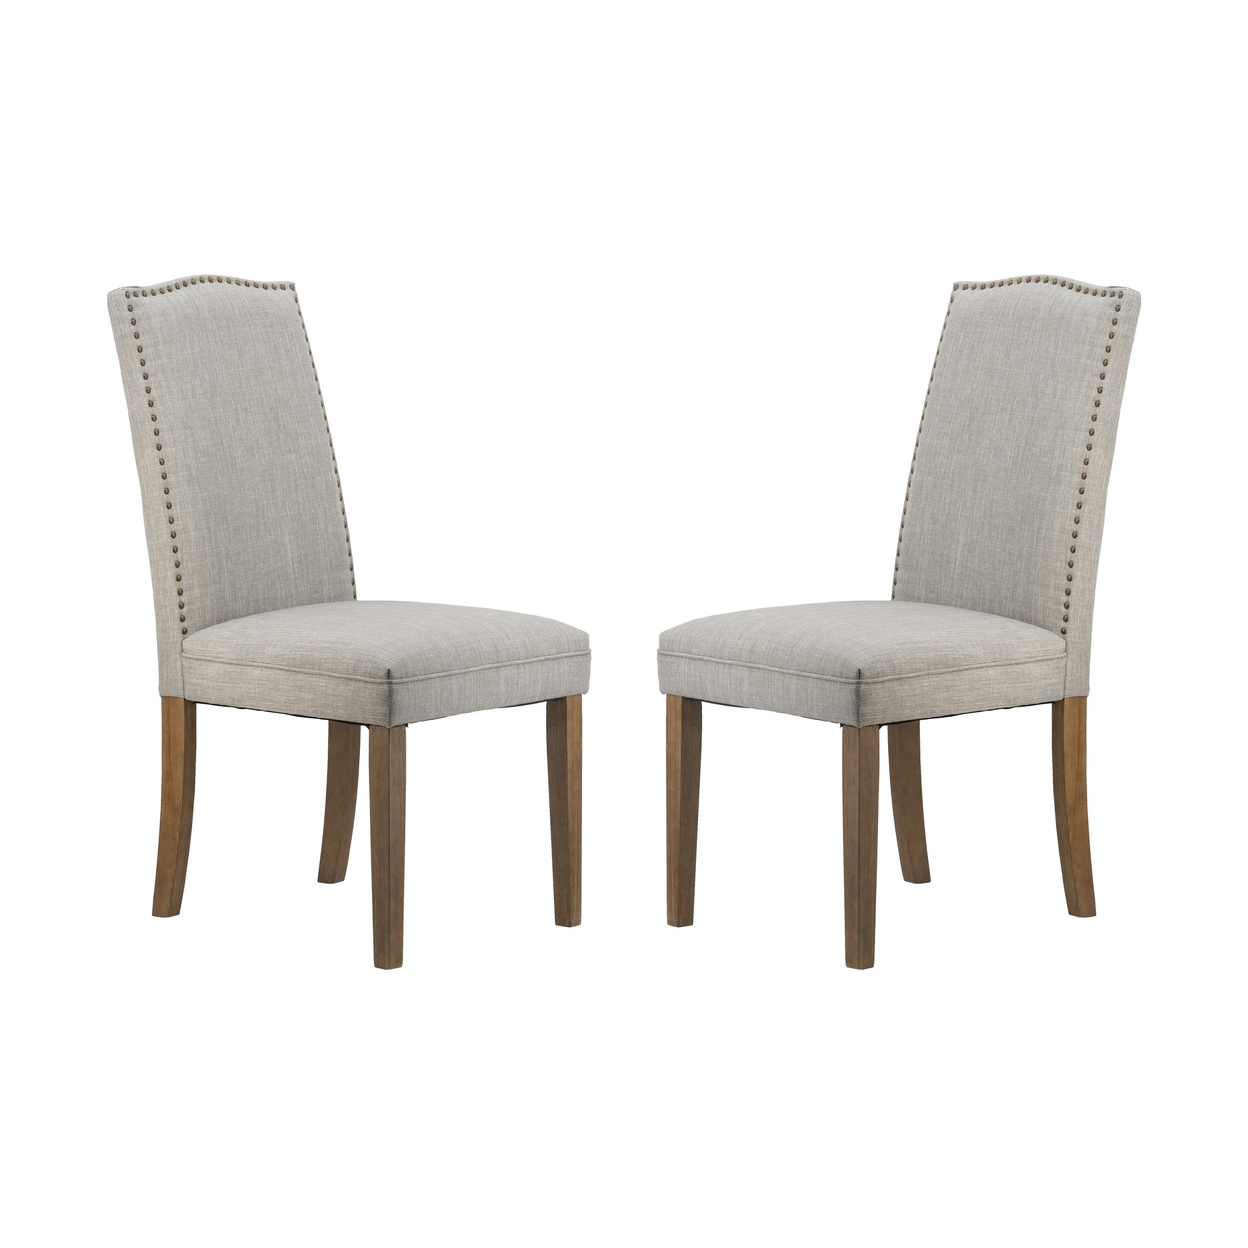 Elva 24 Inch Dining Chair, Smooth Gray Fabric, Nailhead Trim, Wood Legs- Saltoro Sherpi